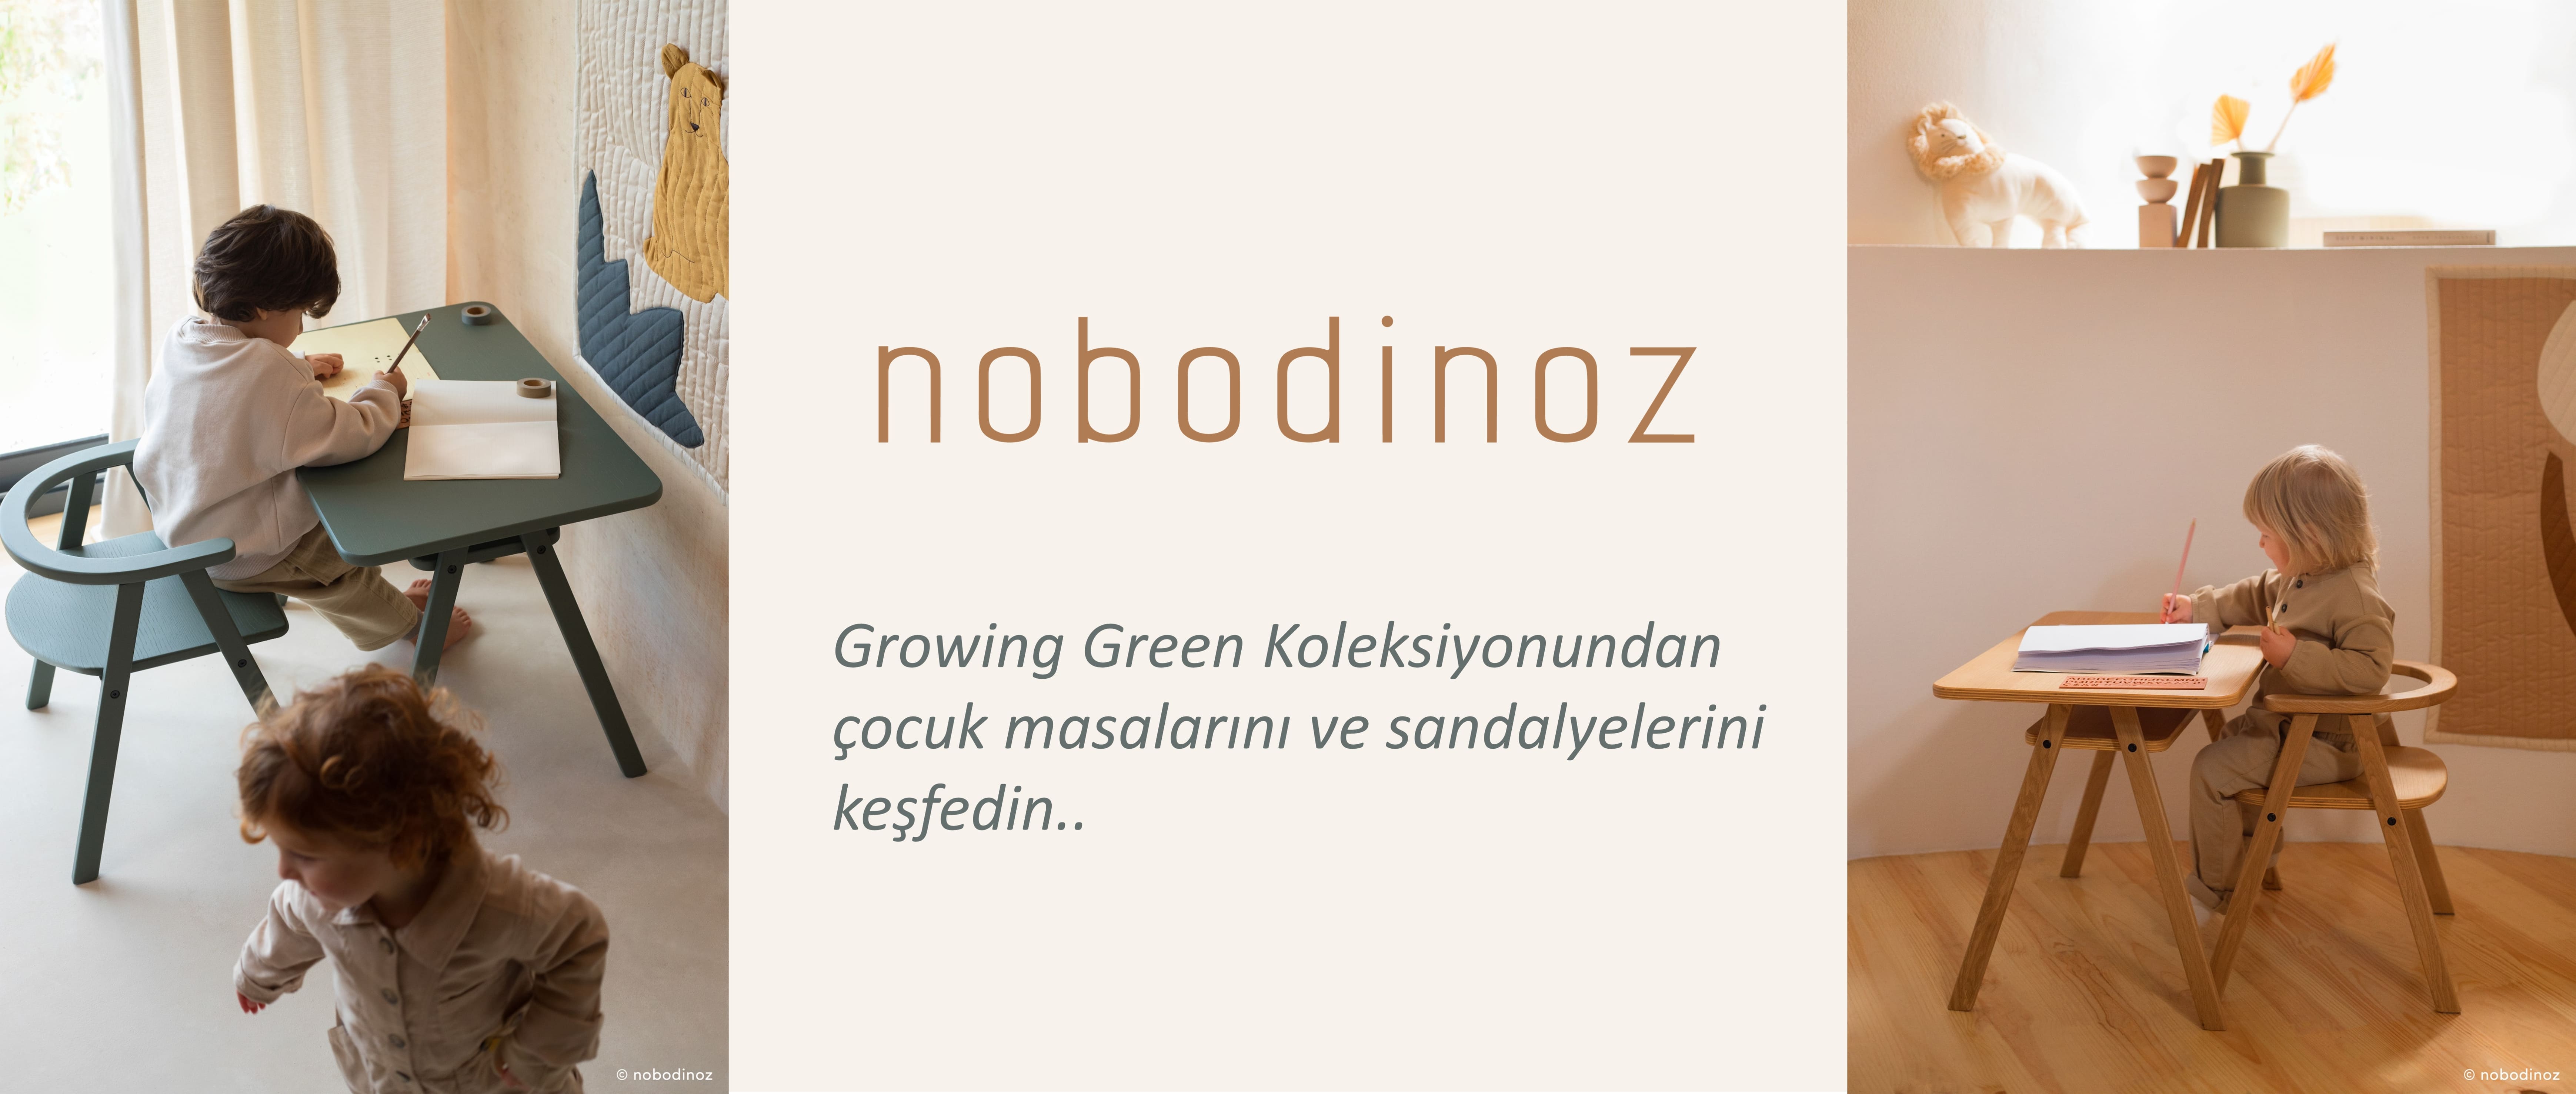 Nobodinoz Growing Green